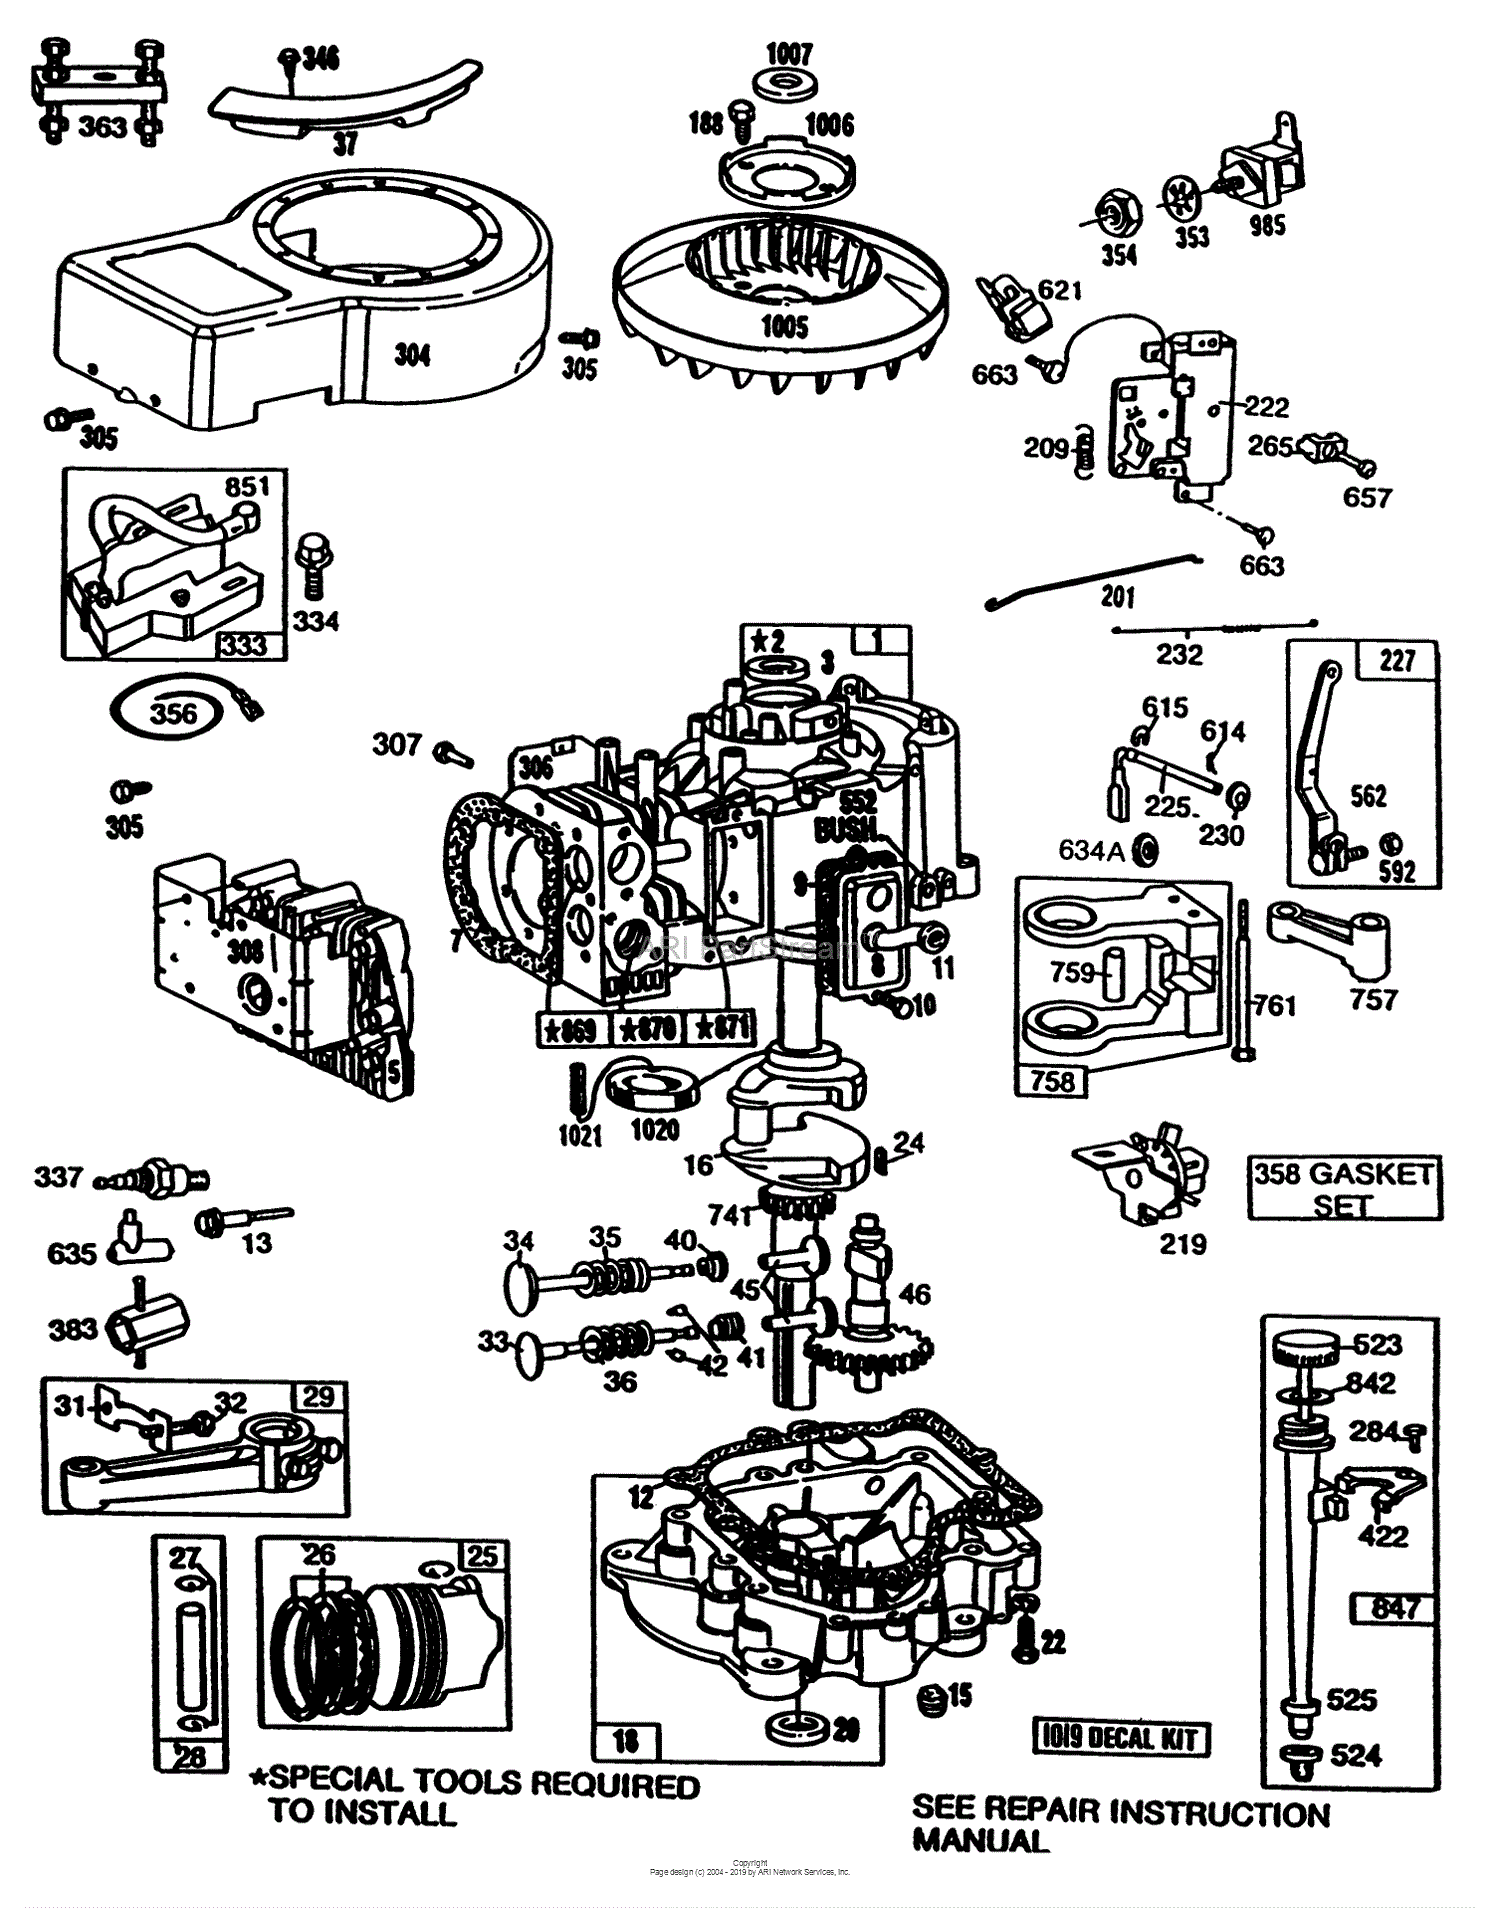 Toro 30102, Mid-Size Proline Gear Traction Unit, 12 hp, 1988 (SN .